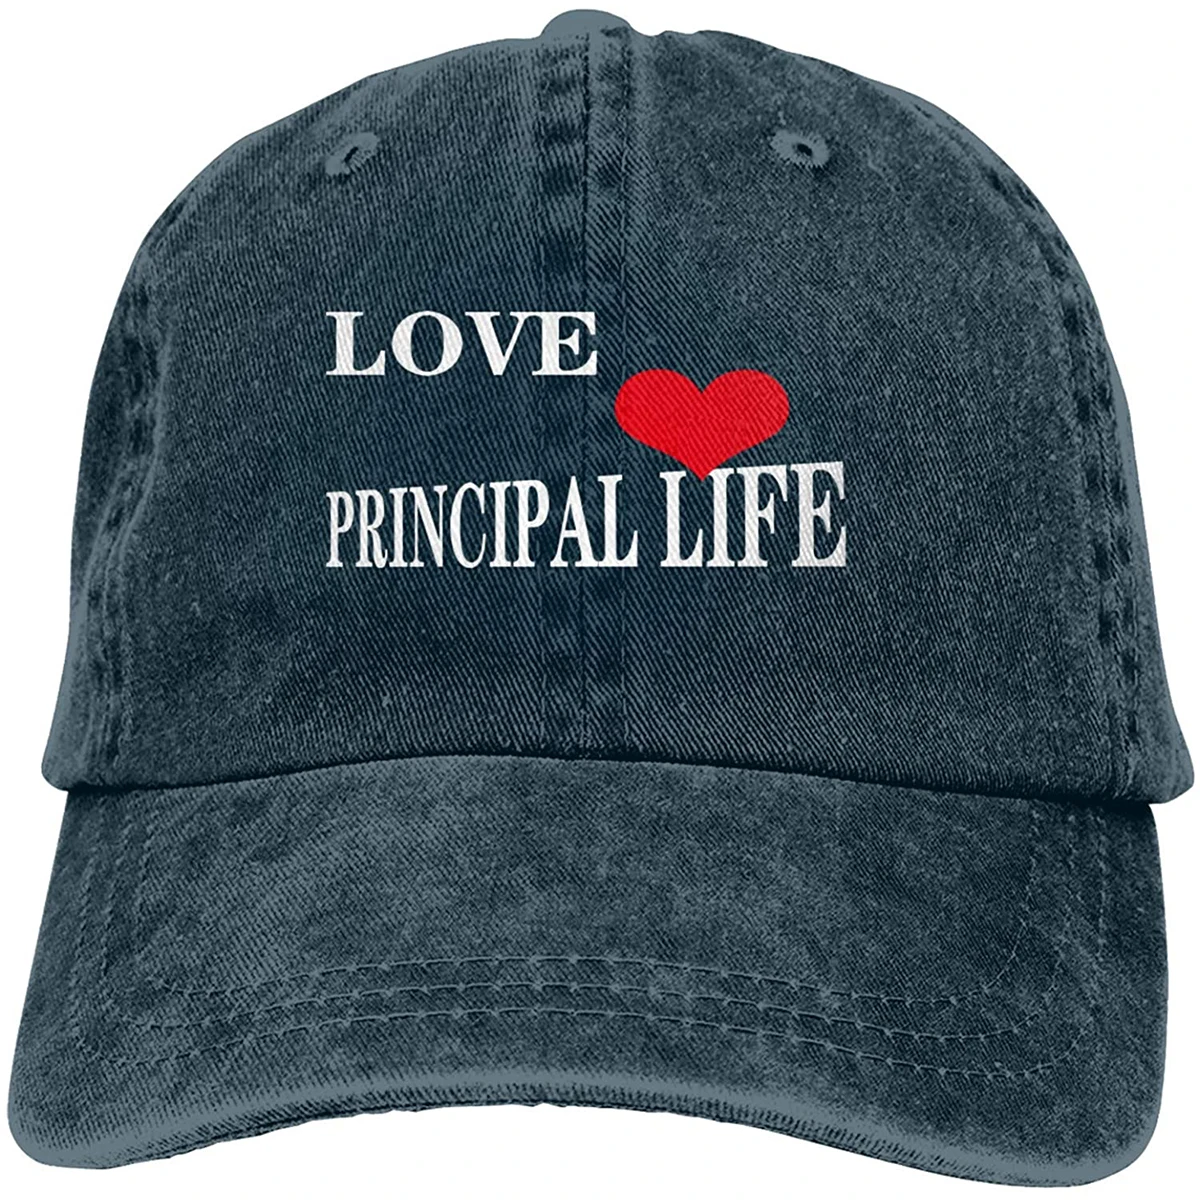 

Love Principal Life Sports Denim Cap Adjustable Unisex Plain Baseball Cowboy Snapback Hat Sombrero De Mujer